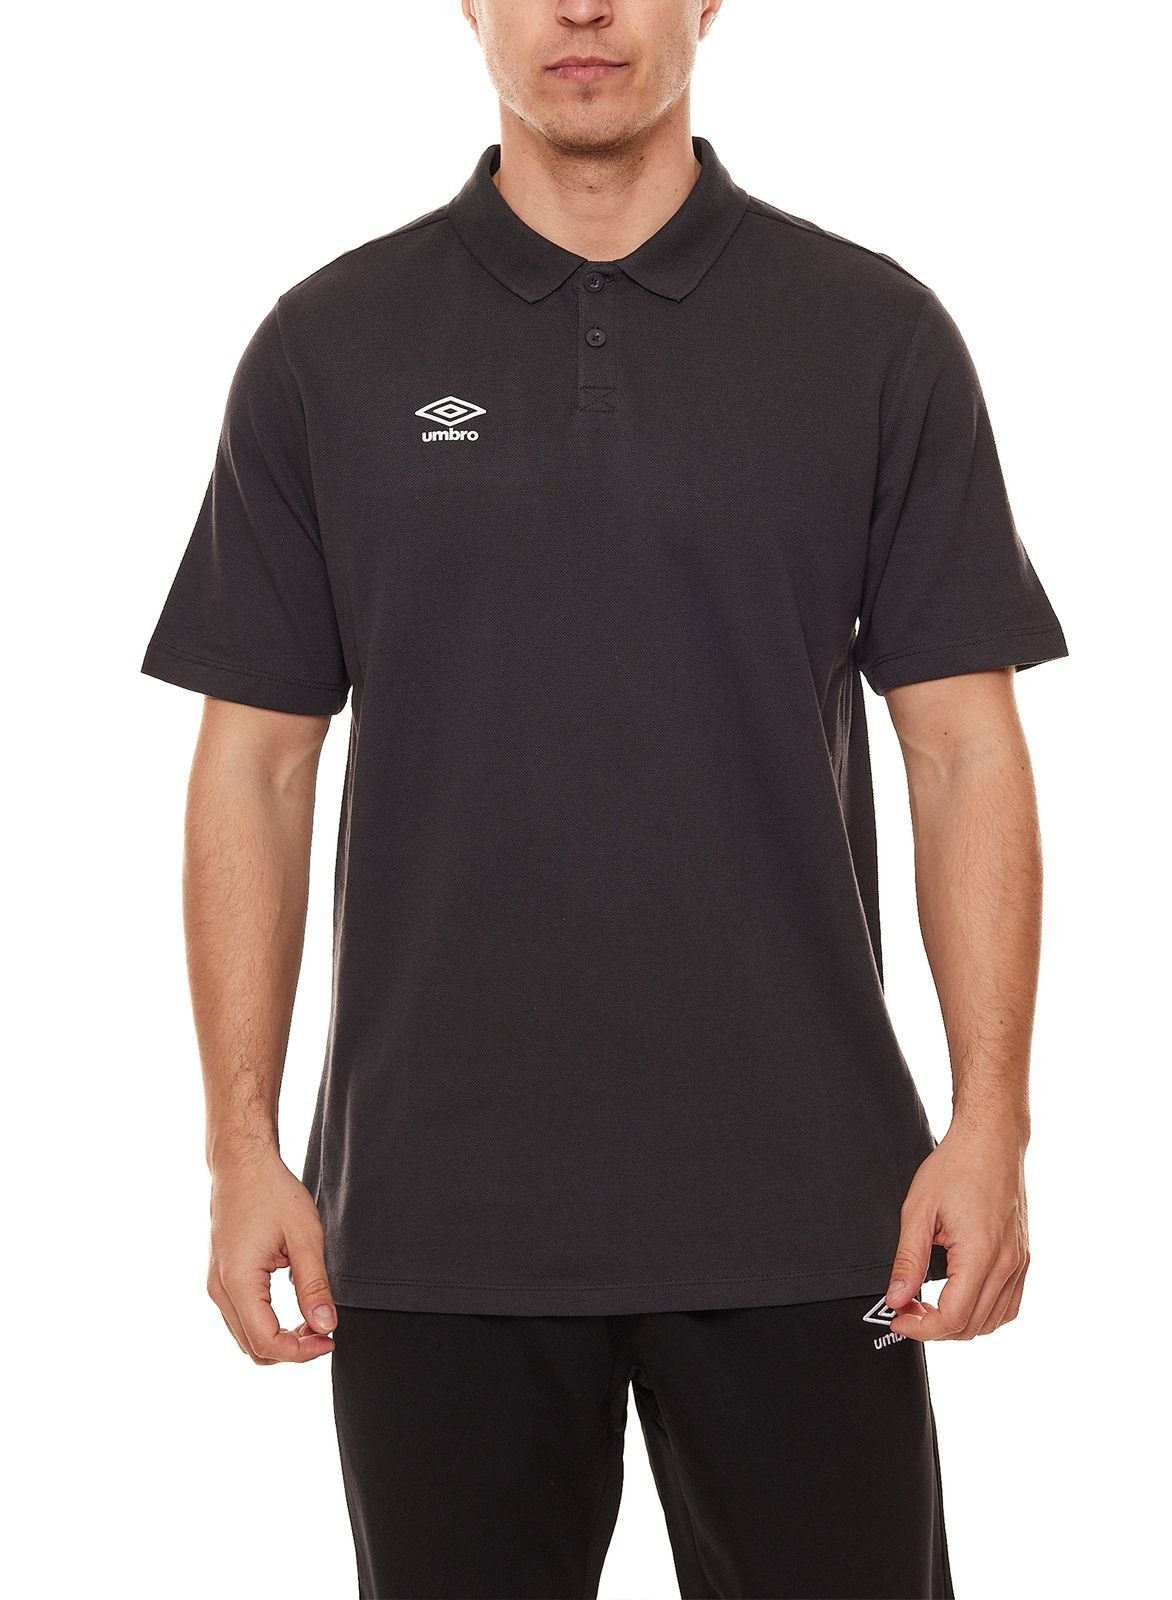 Herren Rundhalsshirt UMTM0323-825 Essential Polohemd Club komfortables umbro Polo-Shirt Dunkelgrau Golf-Shirt Umbro